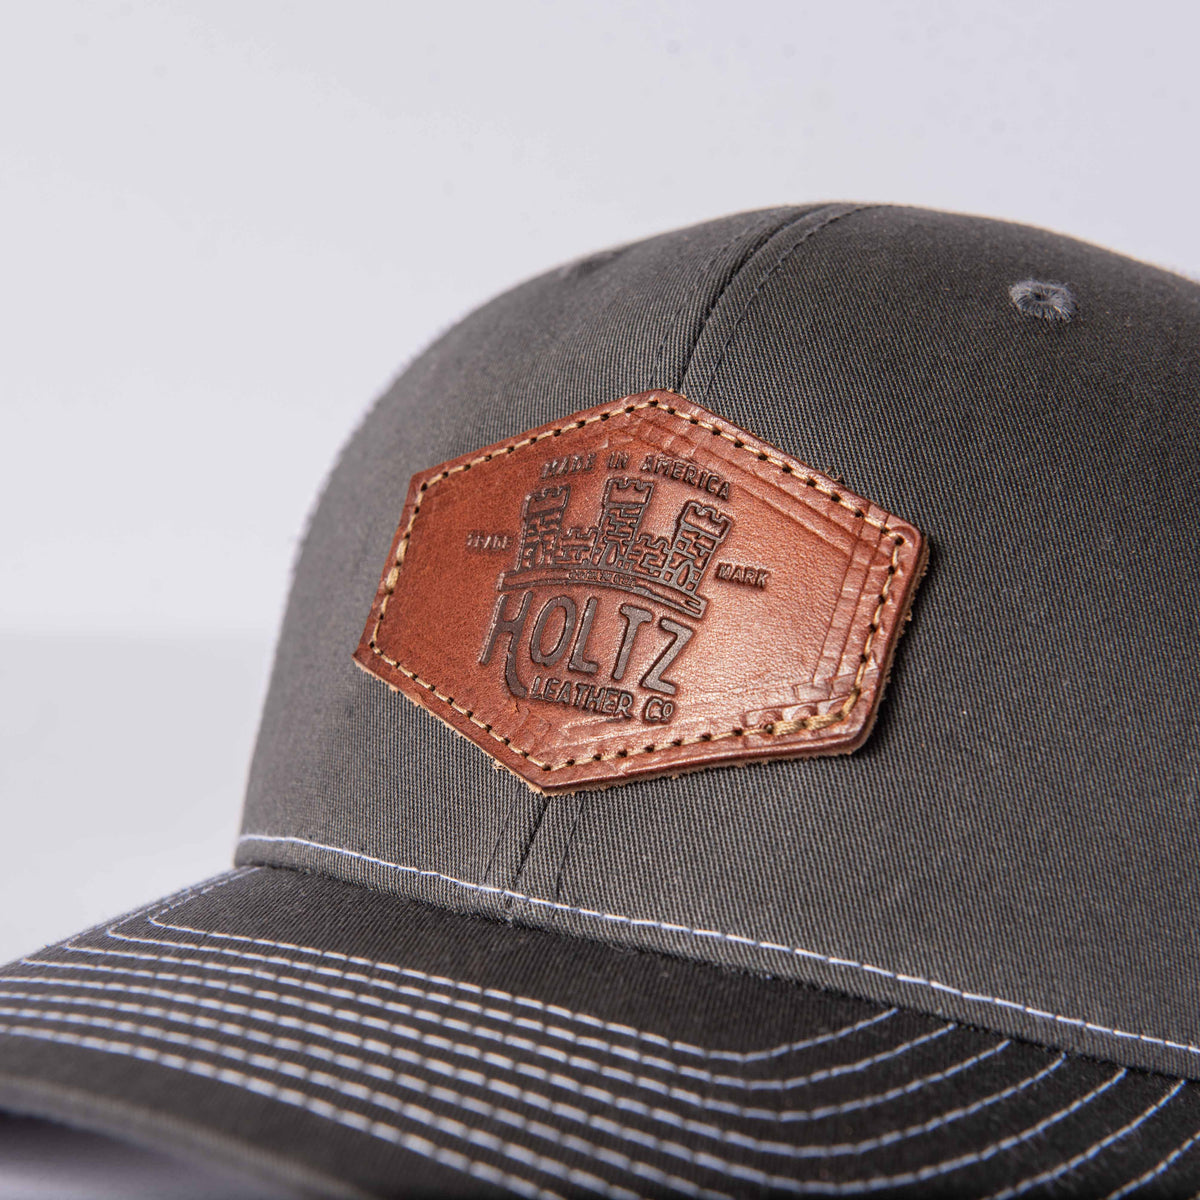 Richardson 112 Holtz Leather Co. Branded Logo Hat